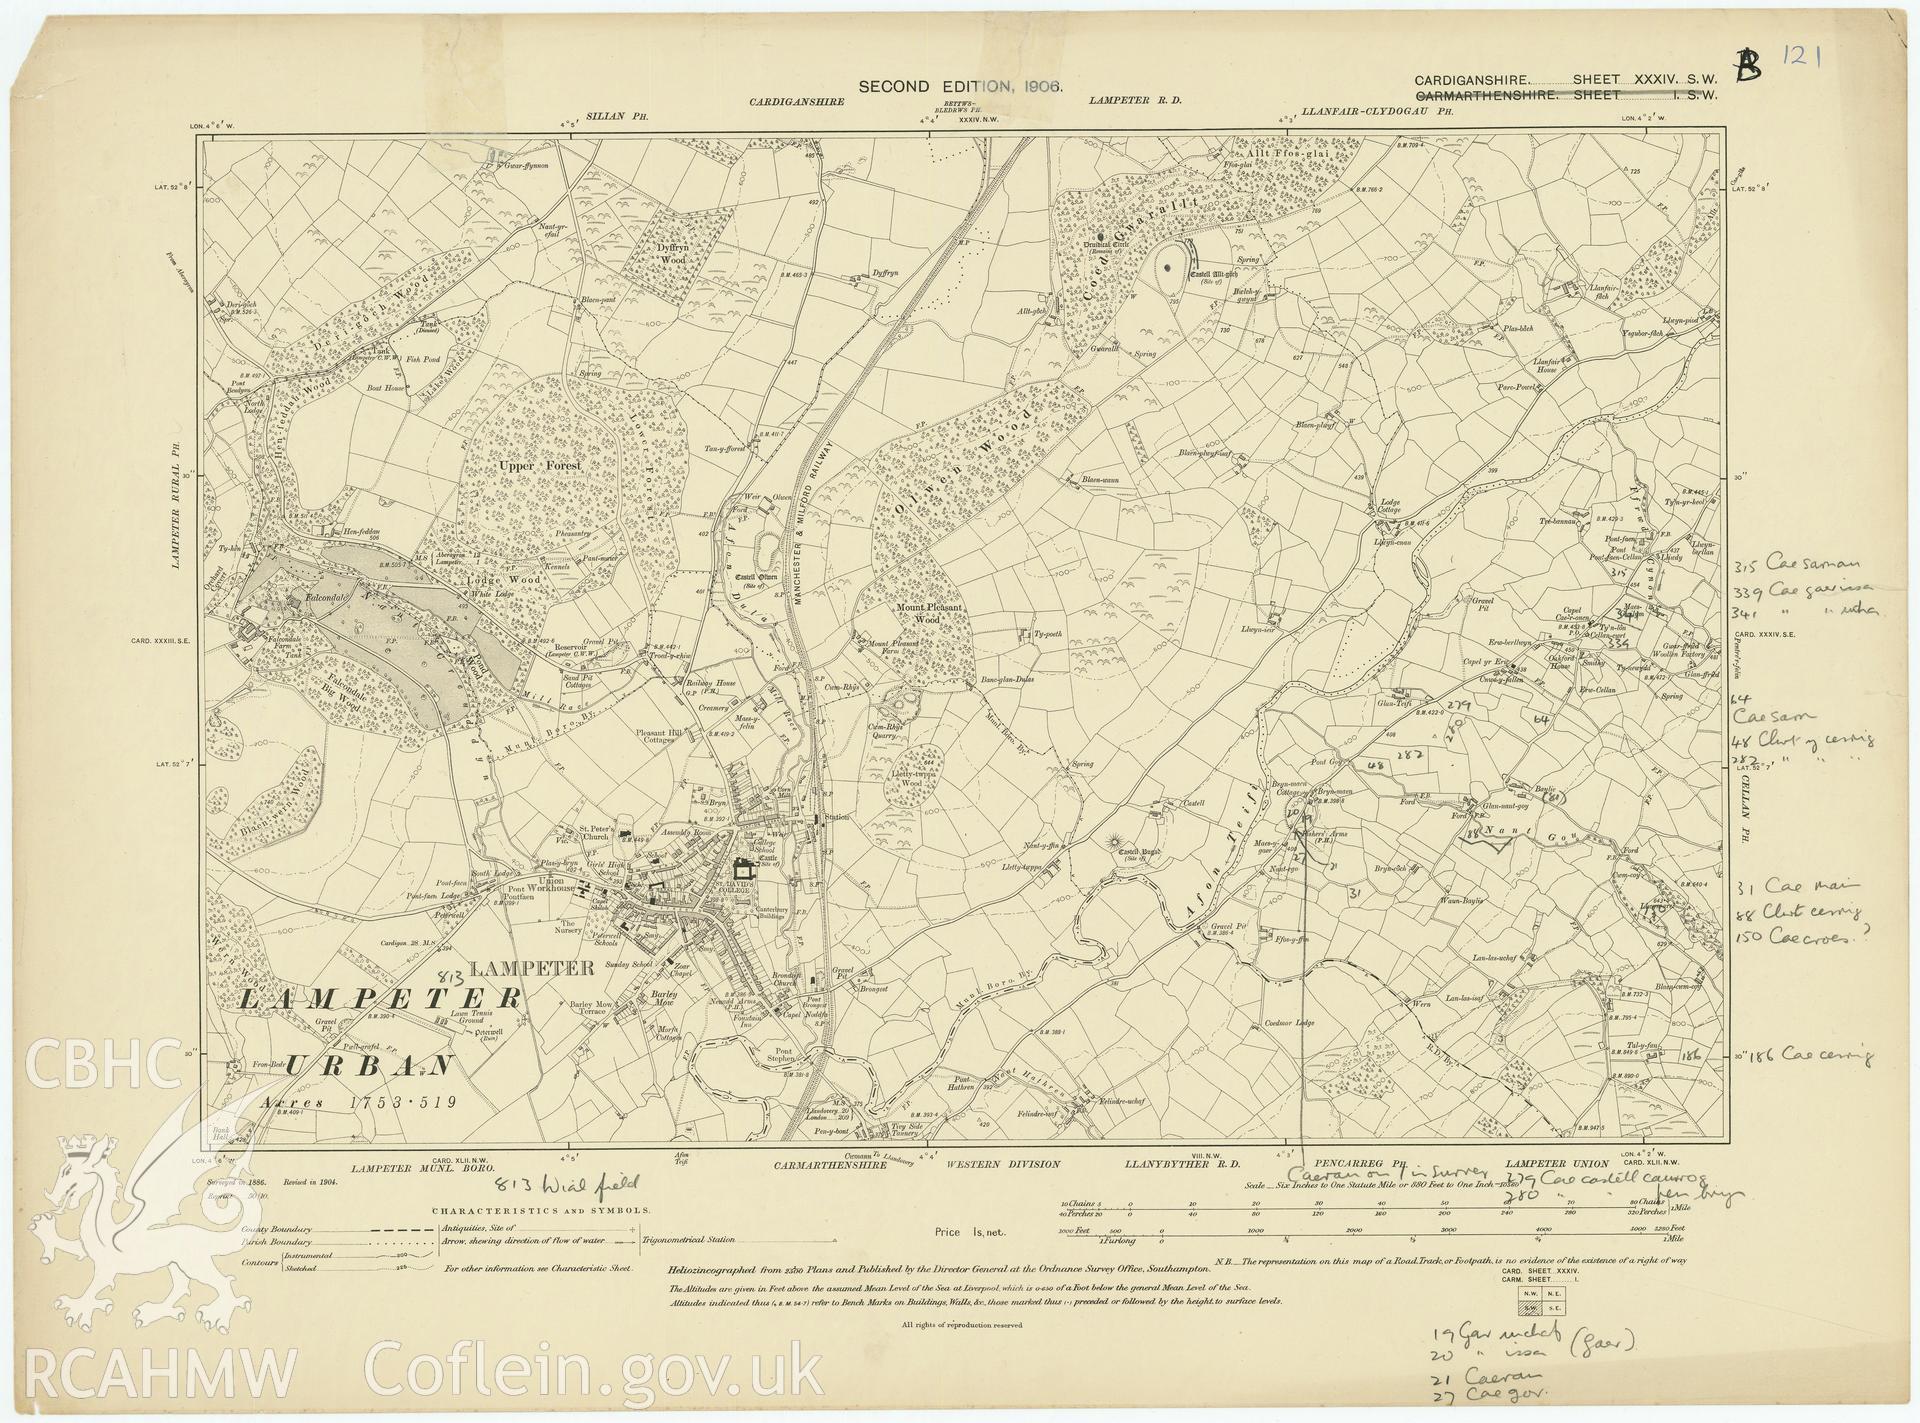 Digital copy of Ordnance Survey 1906 Second Edition 6" map CD.XXXIV.SW